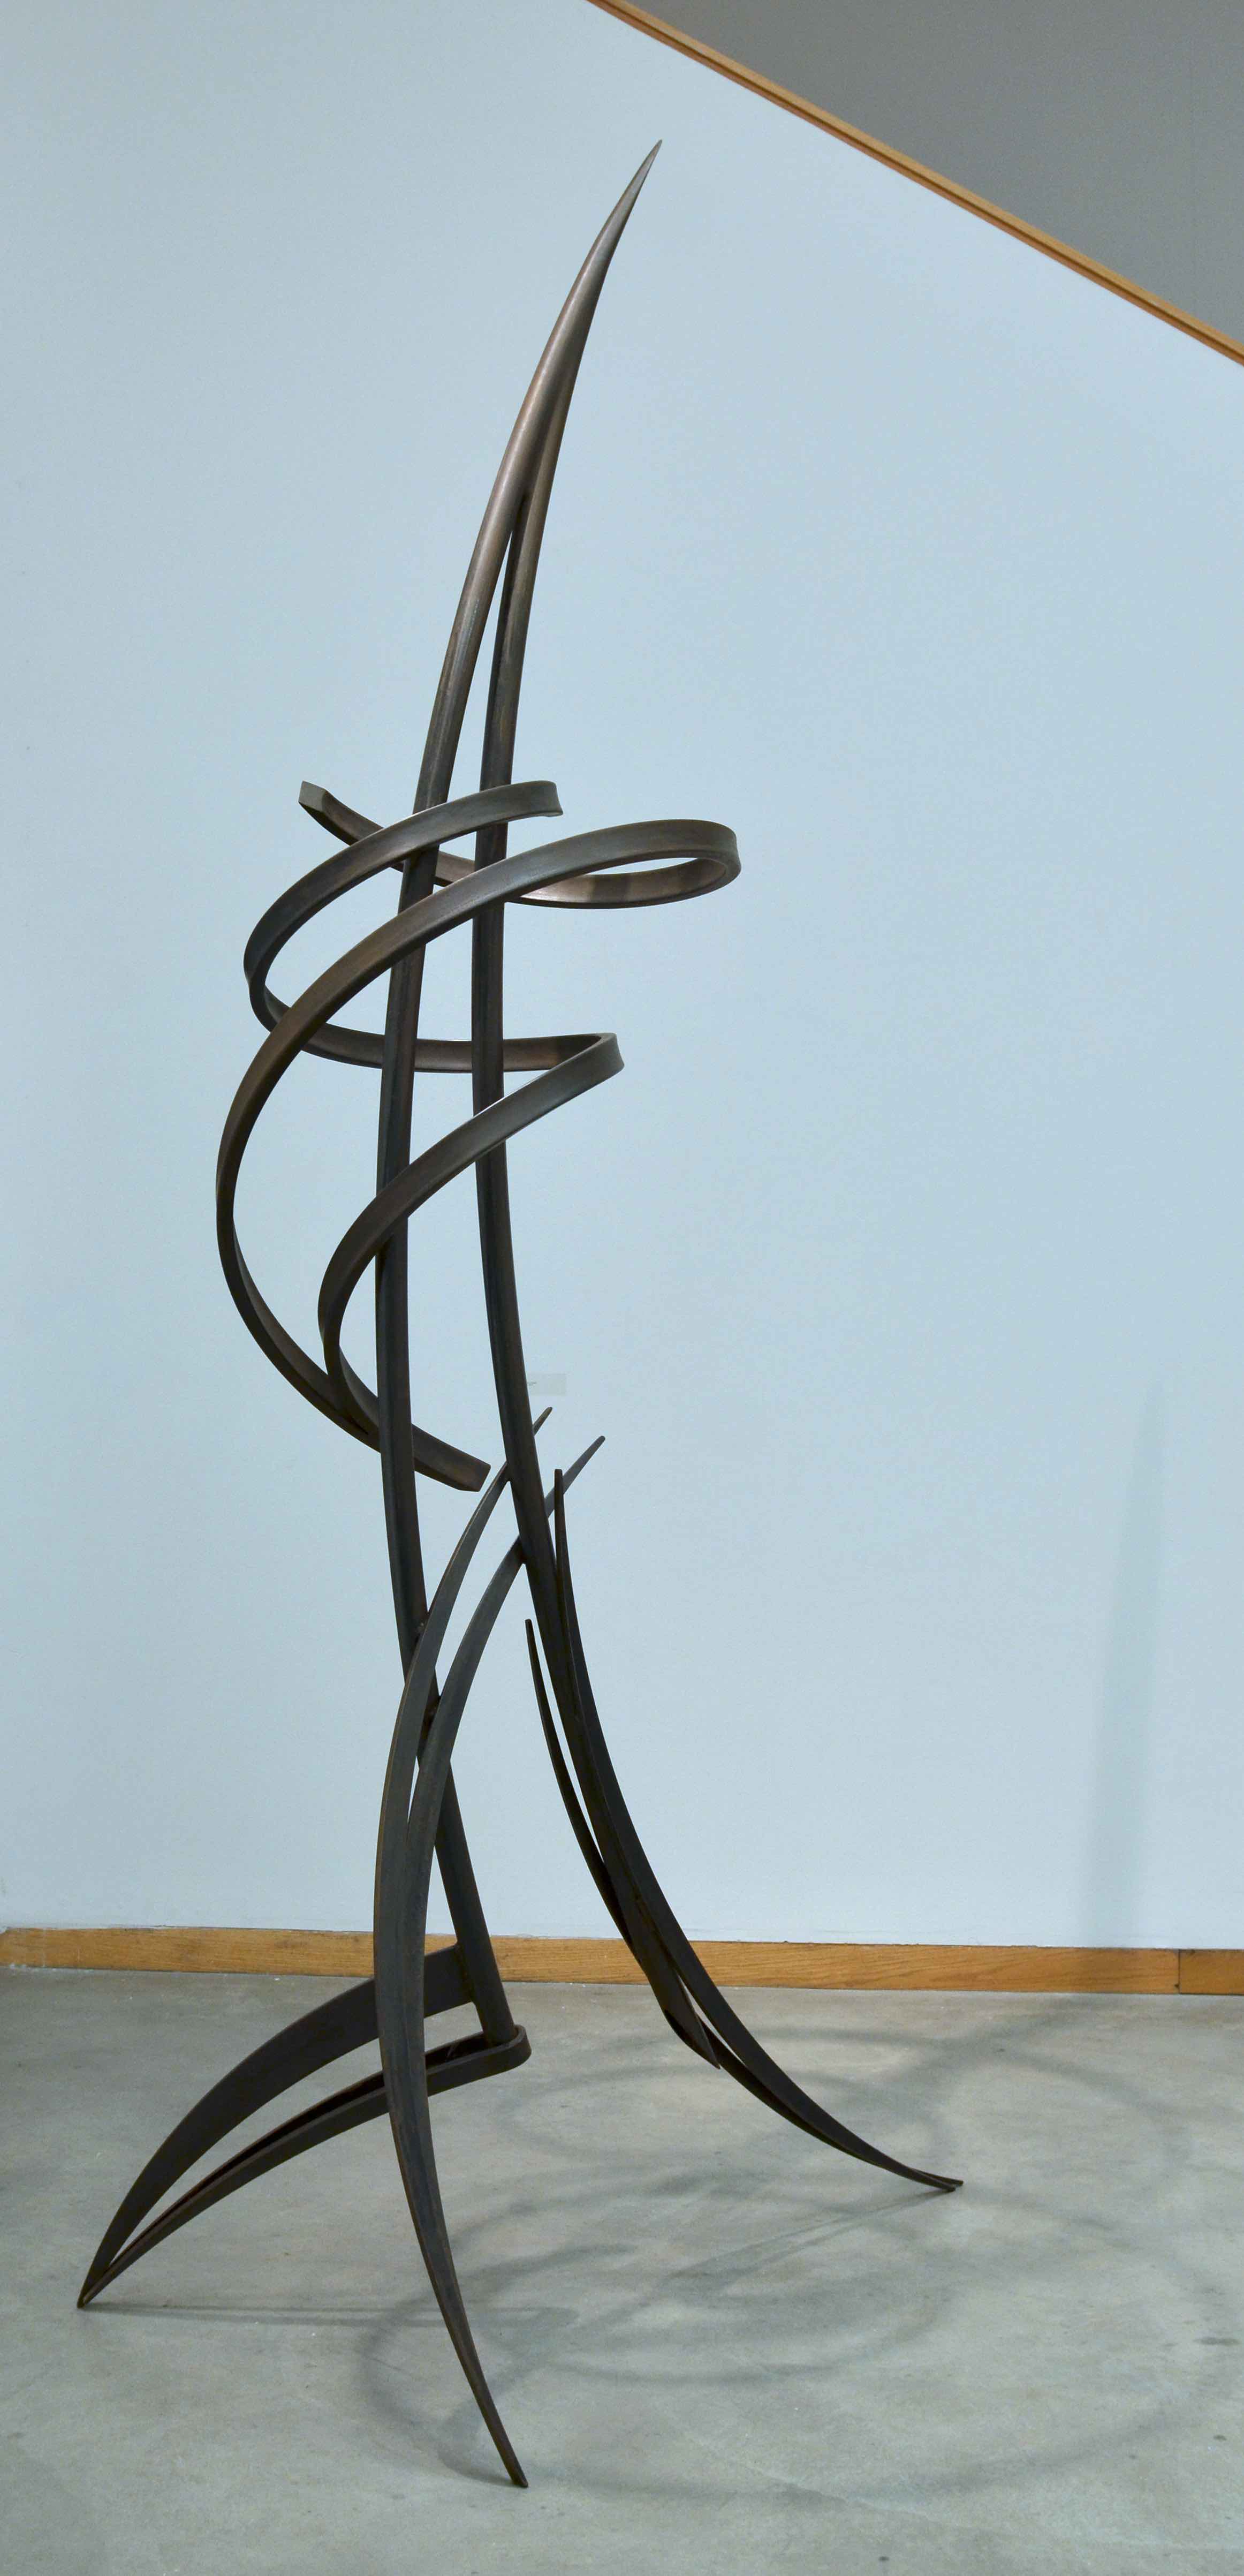 A black metal sculpture designed by Tony Armeni